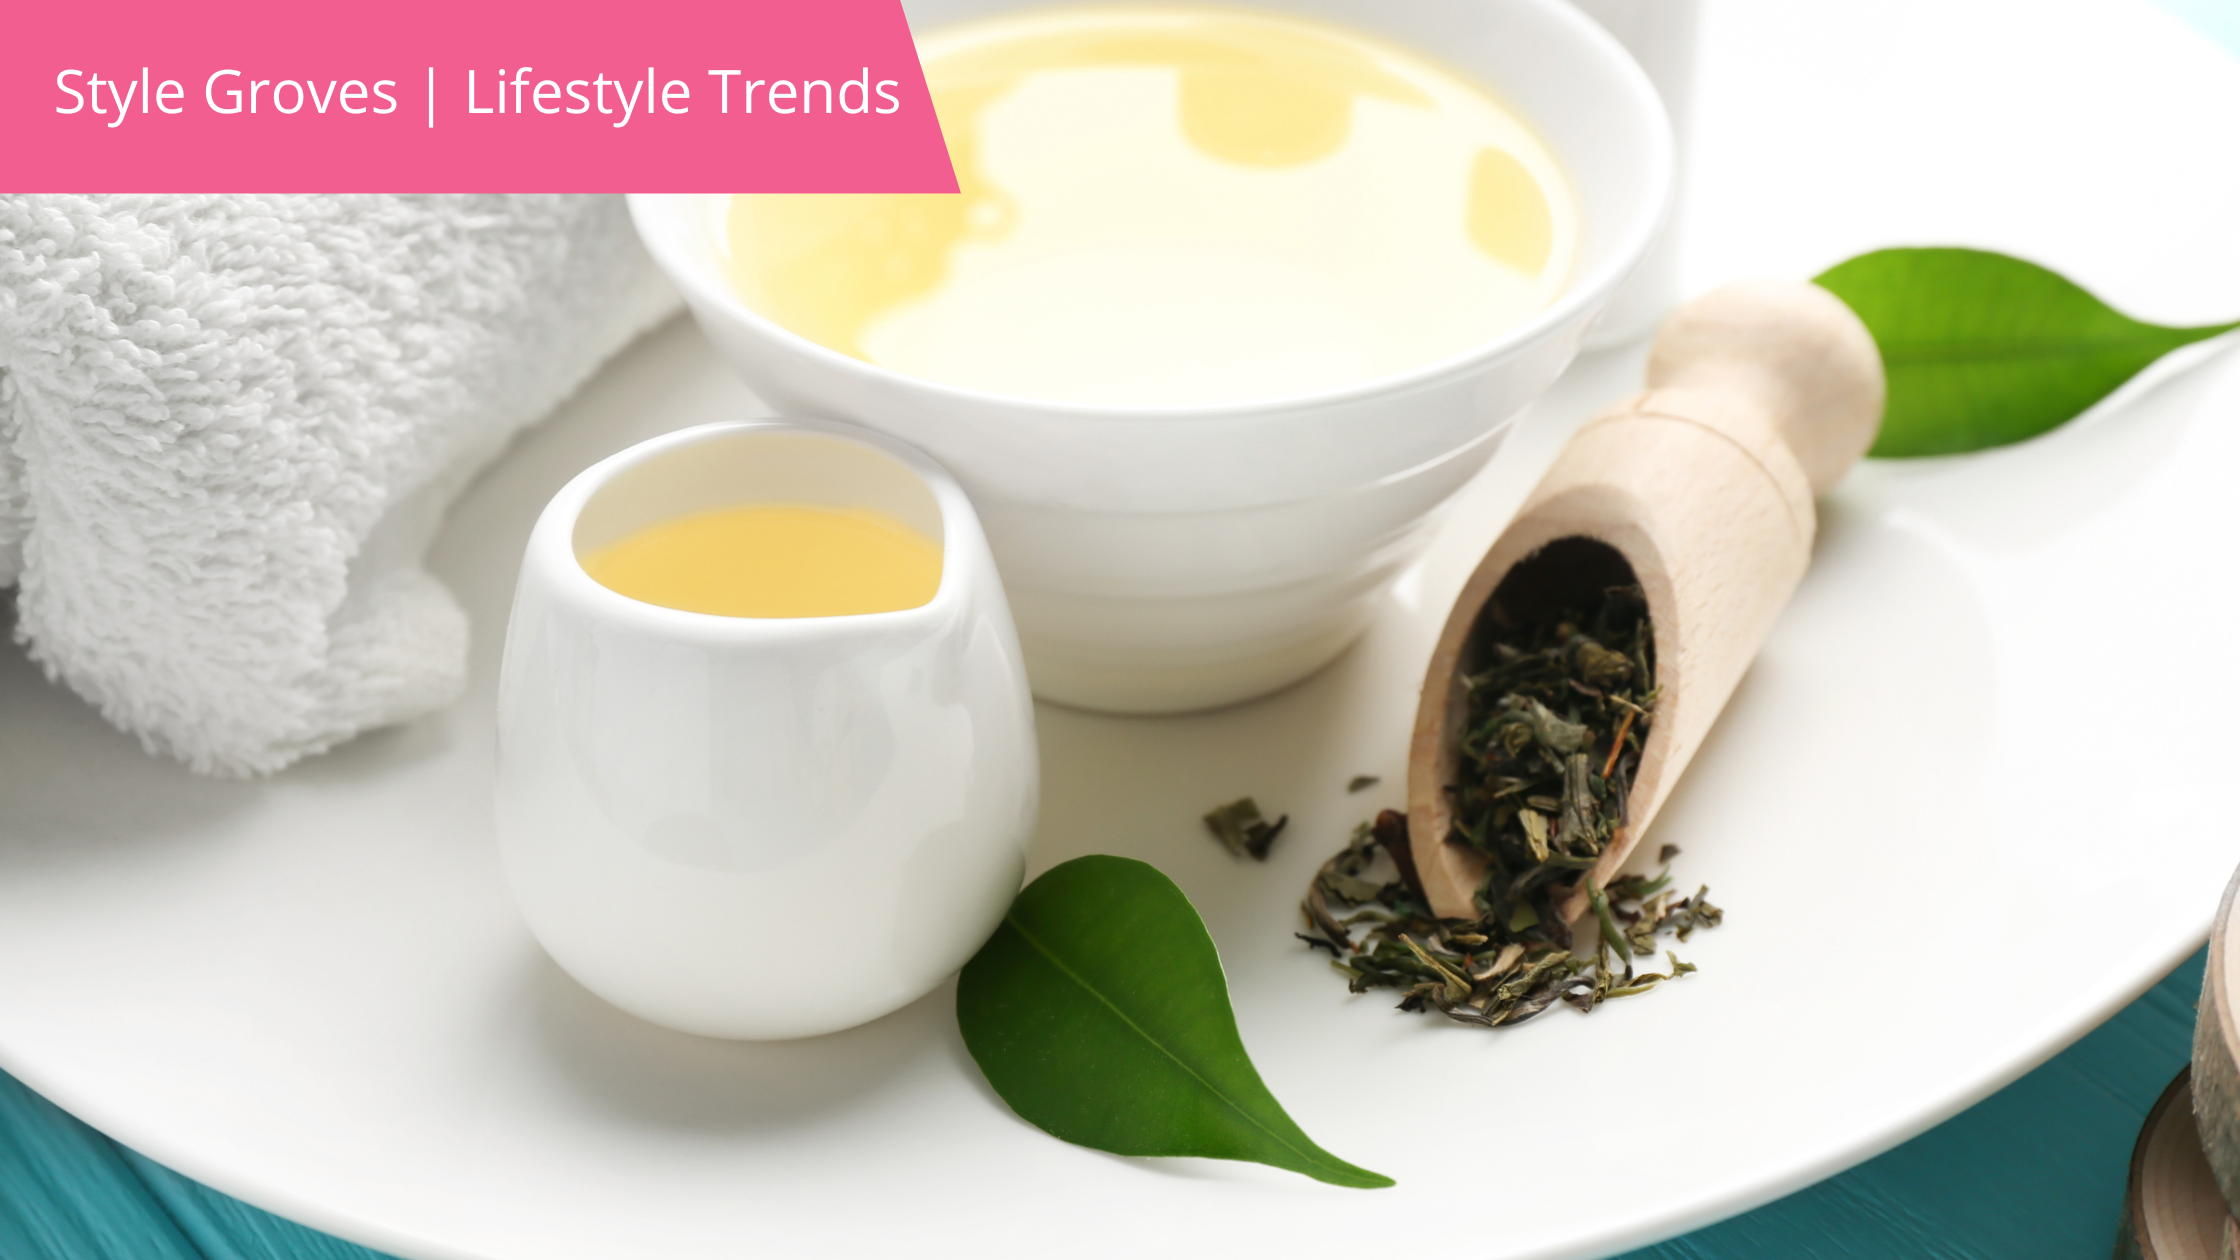 6 Amazing Benefits of Tea Tree Oil for Skin